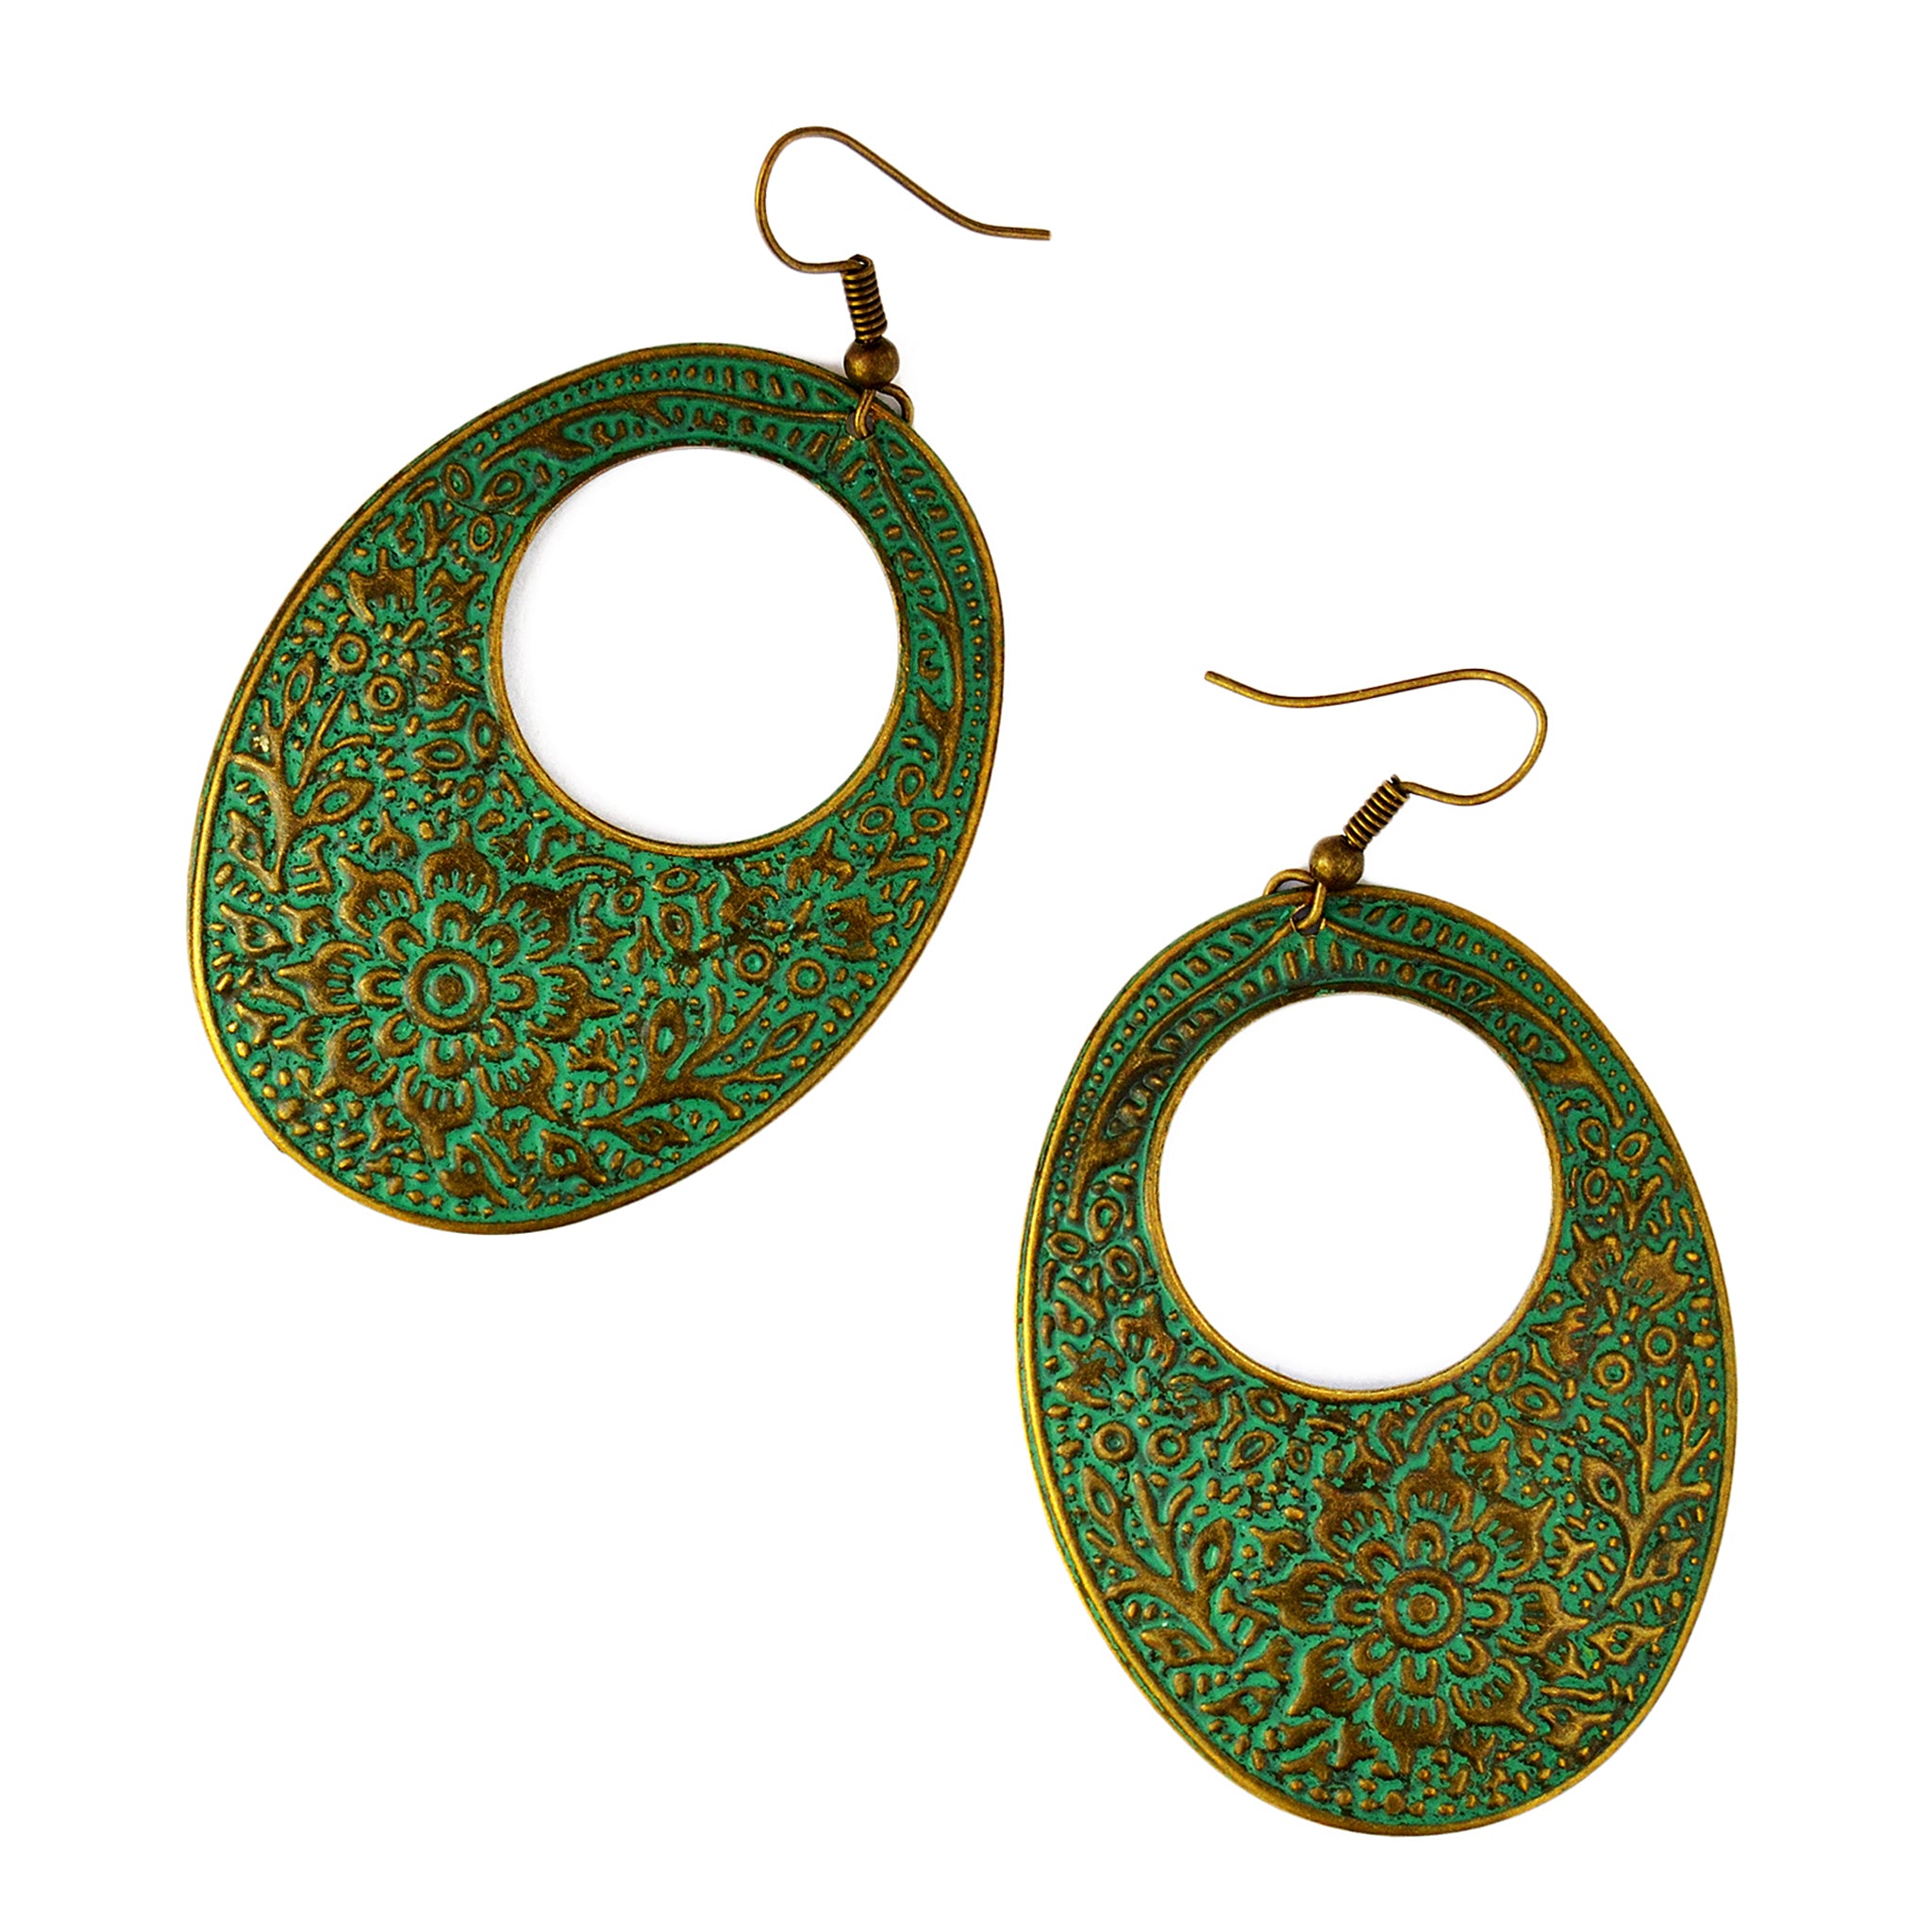 Green patina earrings